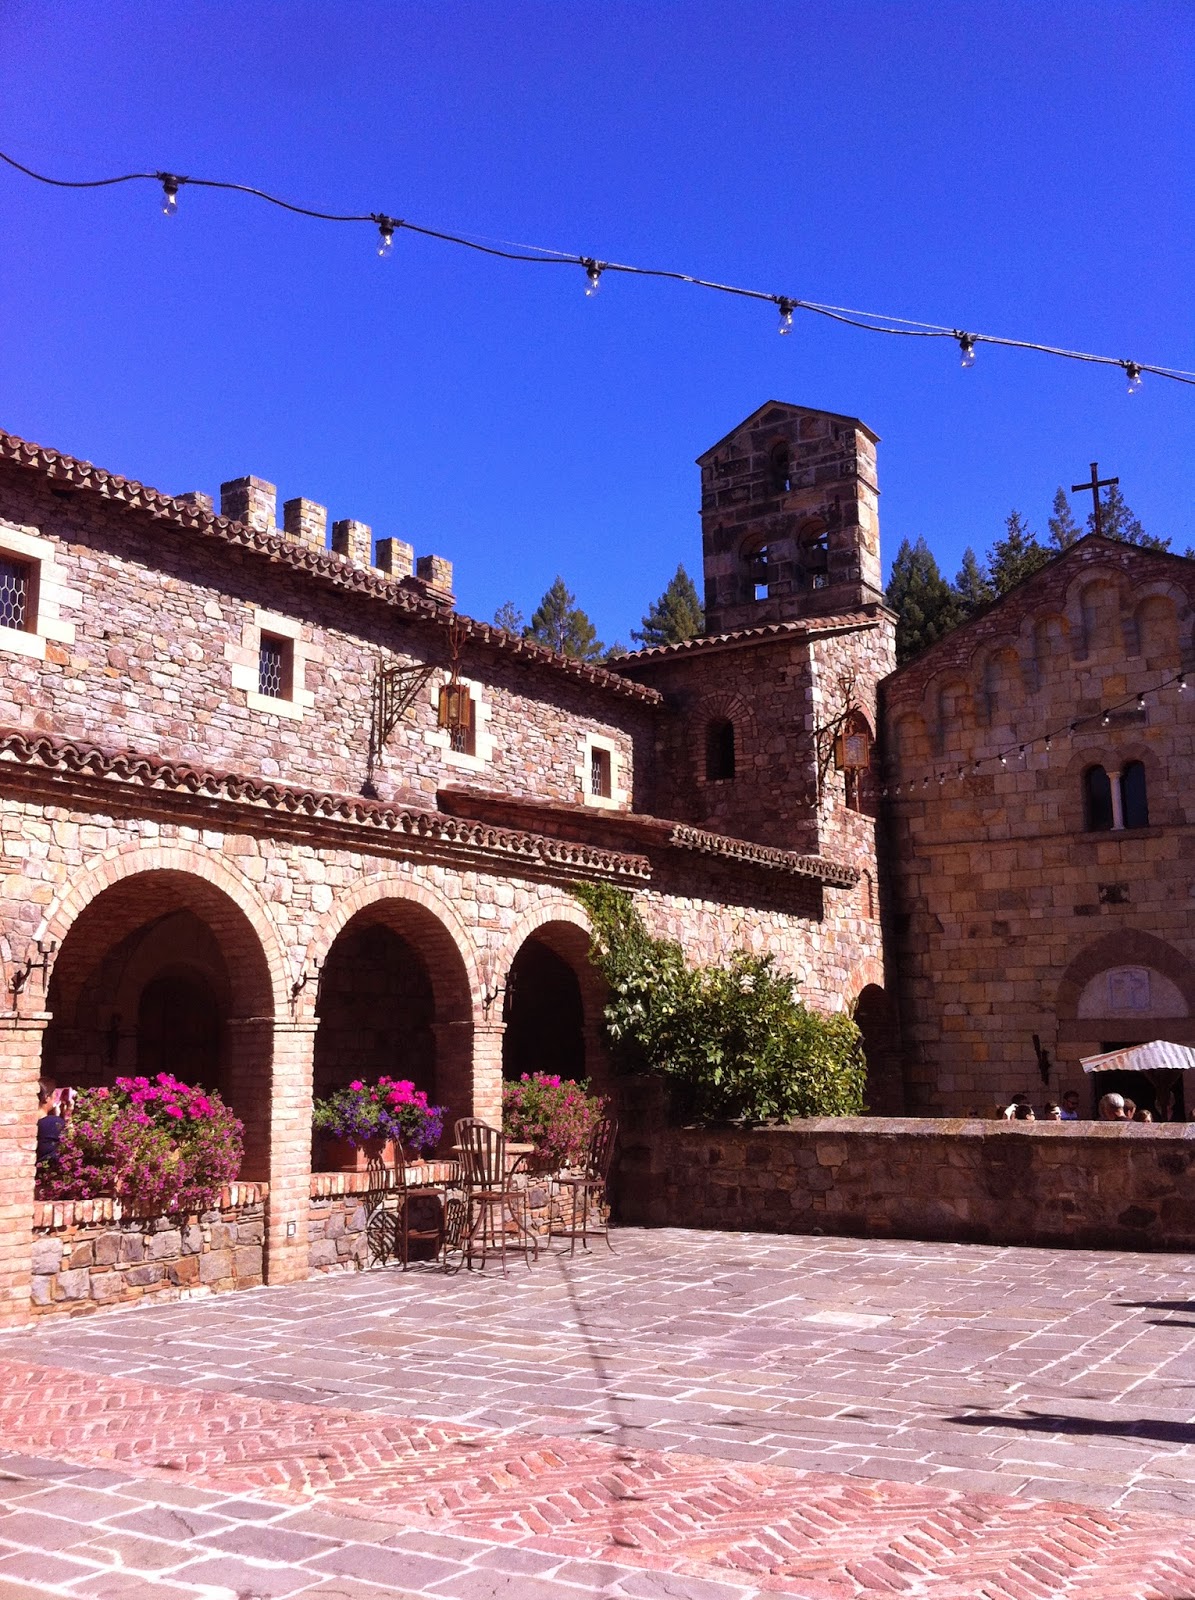 Castello di Amorosa courtyard